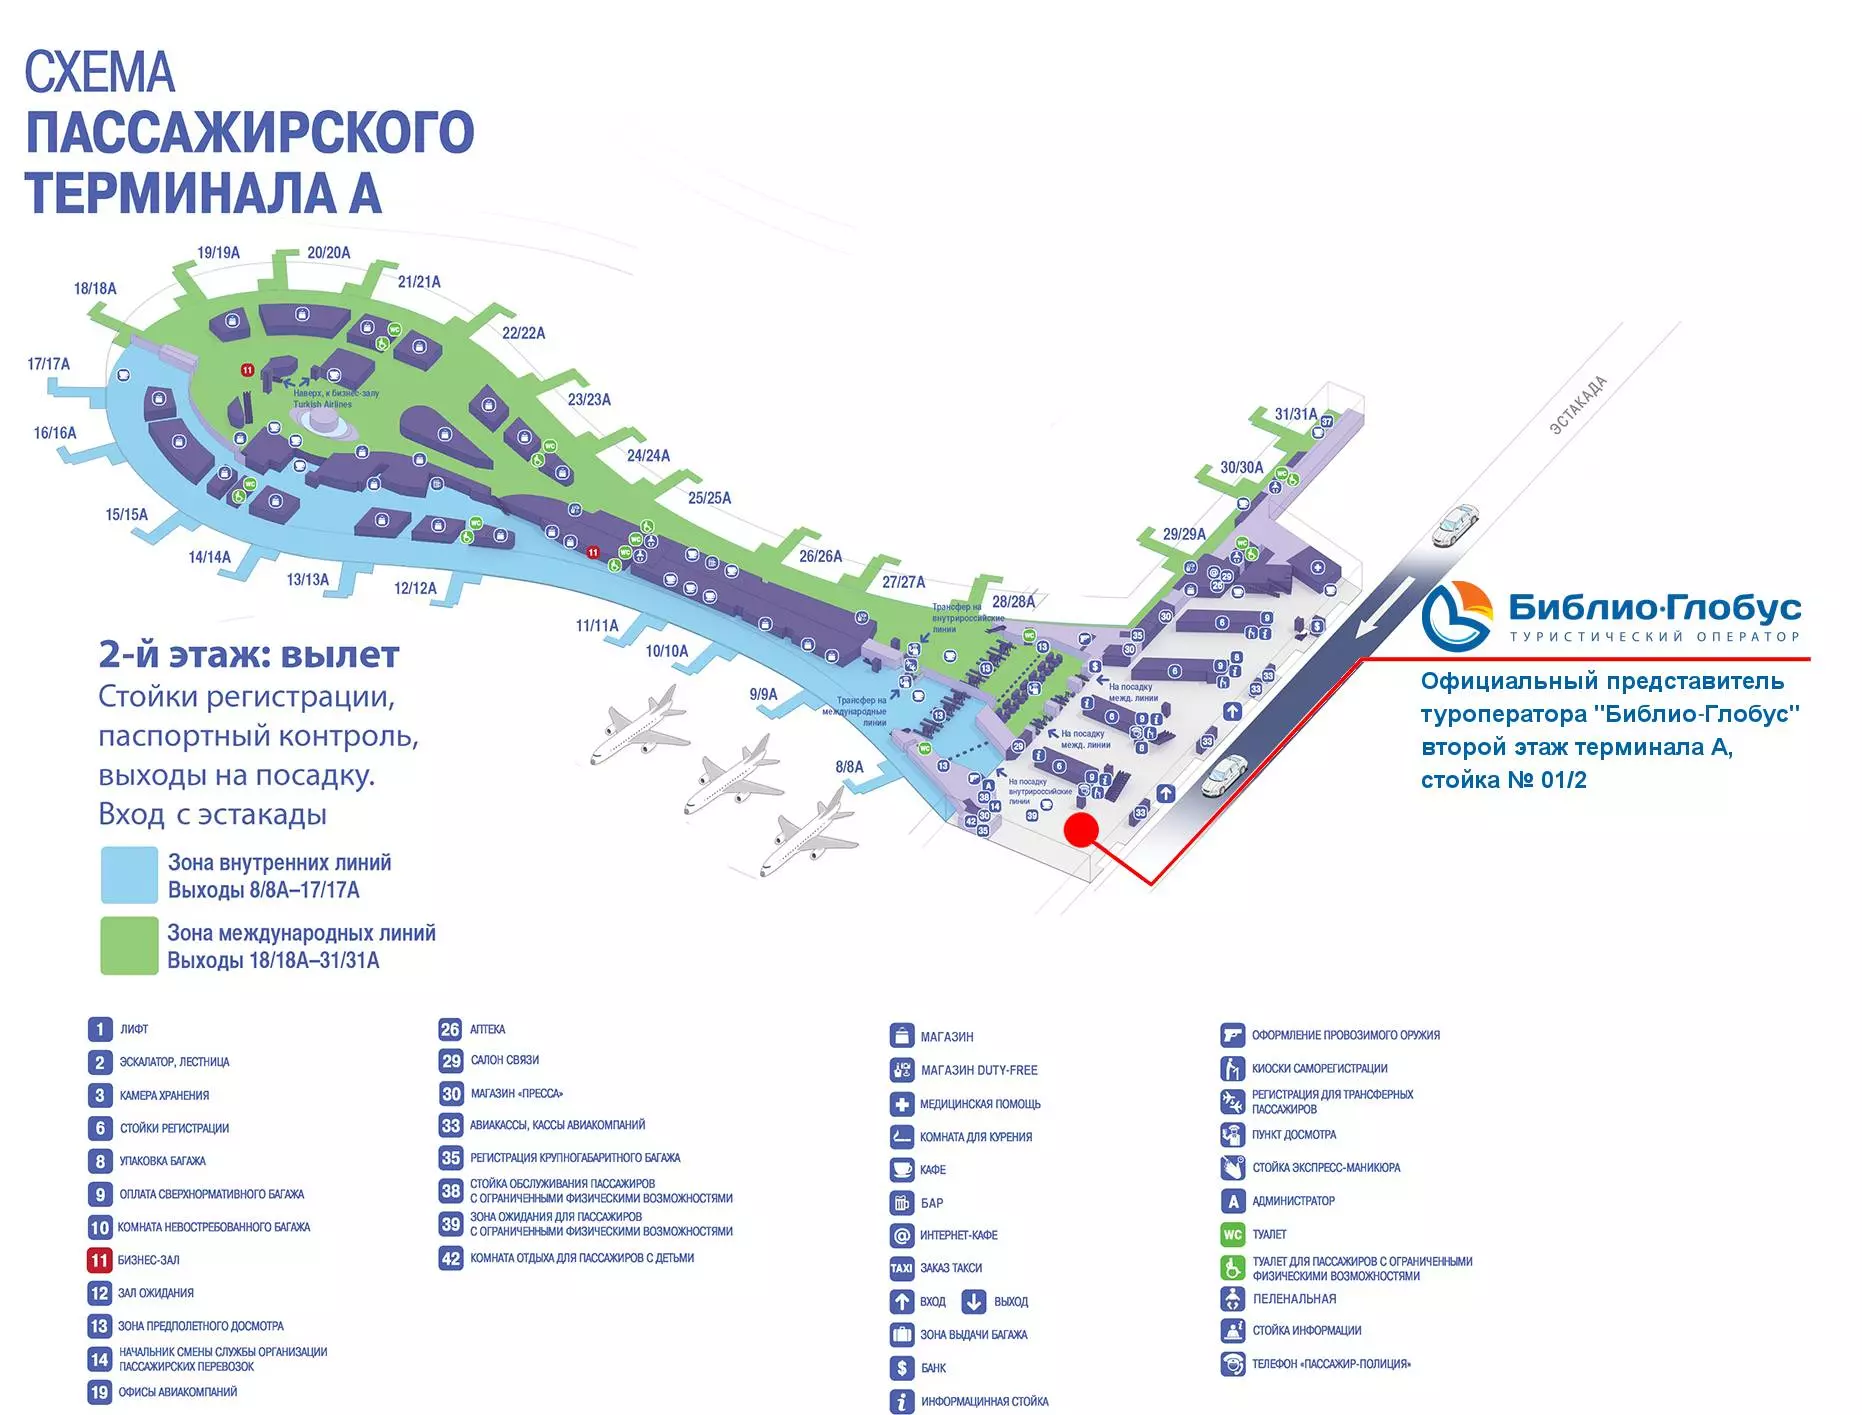 Схема терминалов аэропорта внуково: терминалы